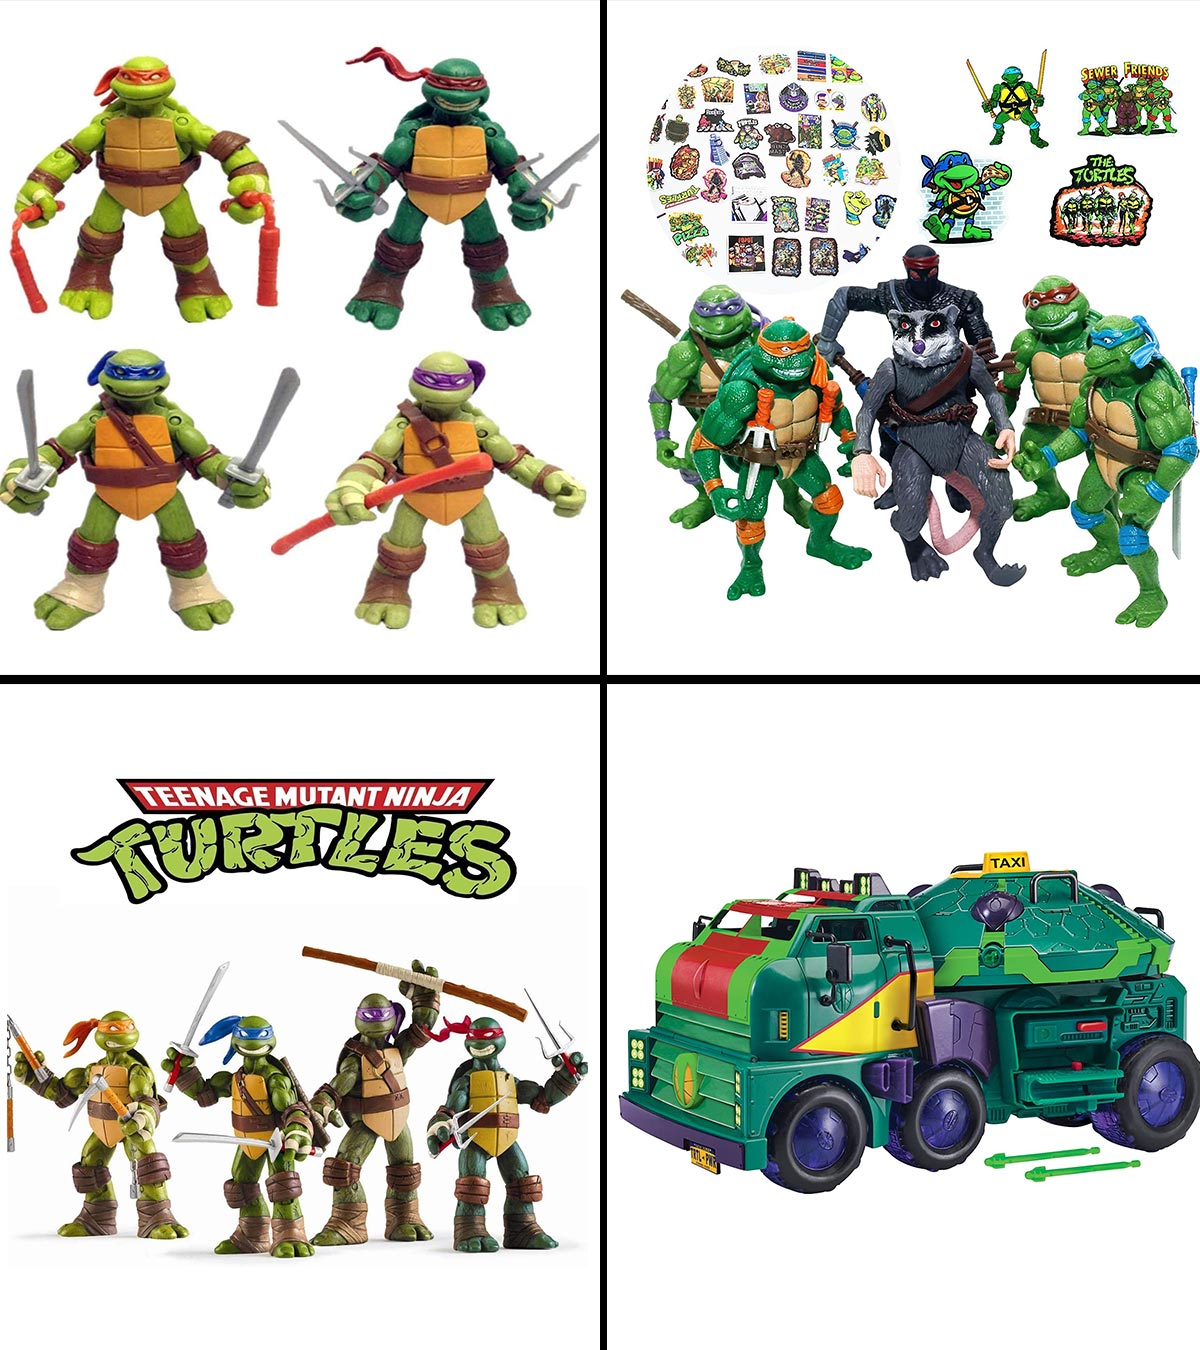 https://www.momjunction.com/wp-content/uploads/2021/06/10-Best-Ninja-Turtle-Toys-in-2021-2.jpg